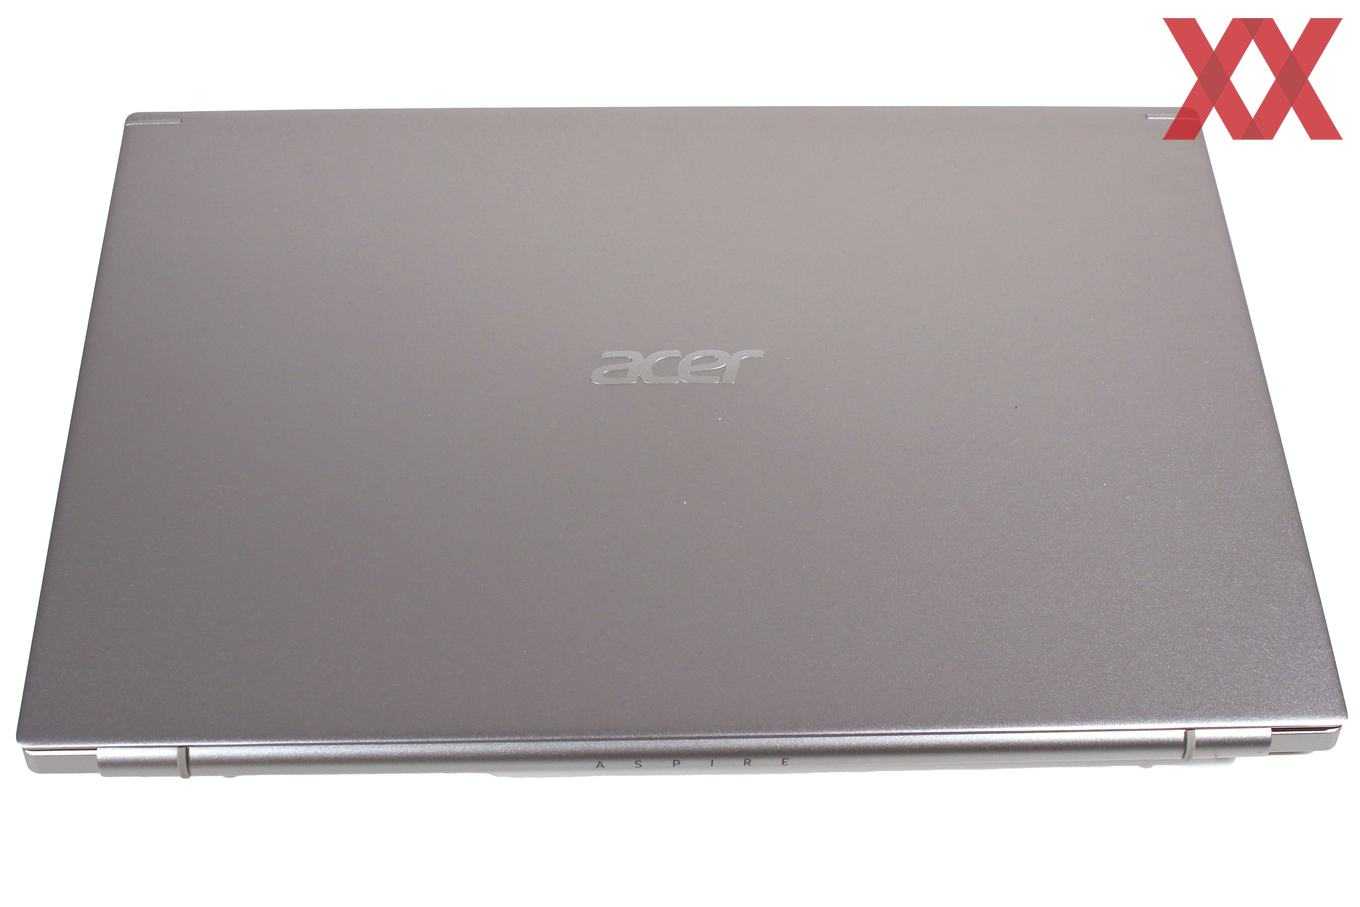 Acer aspire 5 (a515-56g) - i5-1135g7 · mx350 · 15.6”, full hd (1920 x 1080), ips · 512gb ssd · 2x 4gb ddr4 · no os | laptopmedia.com